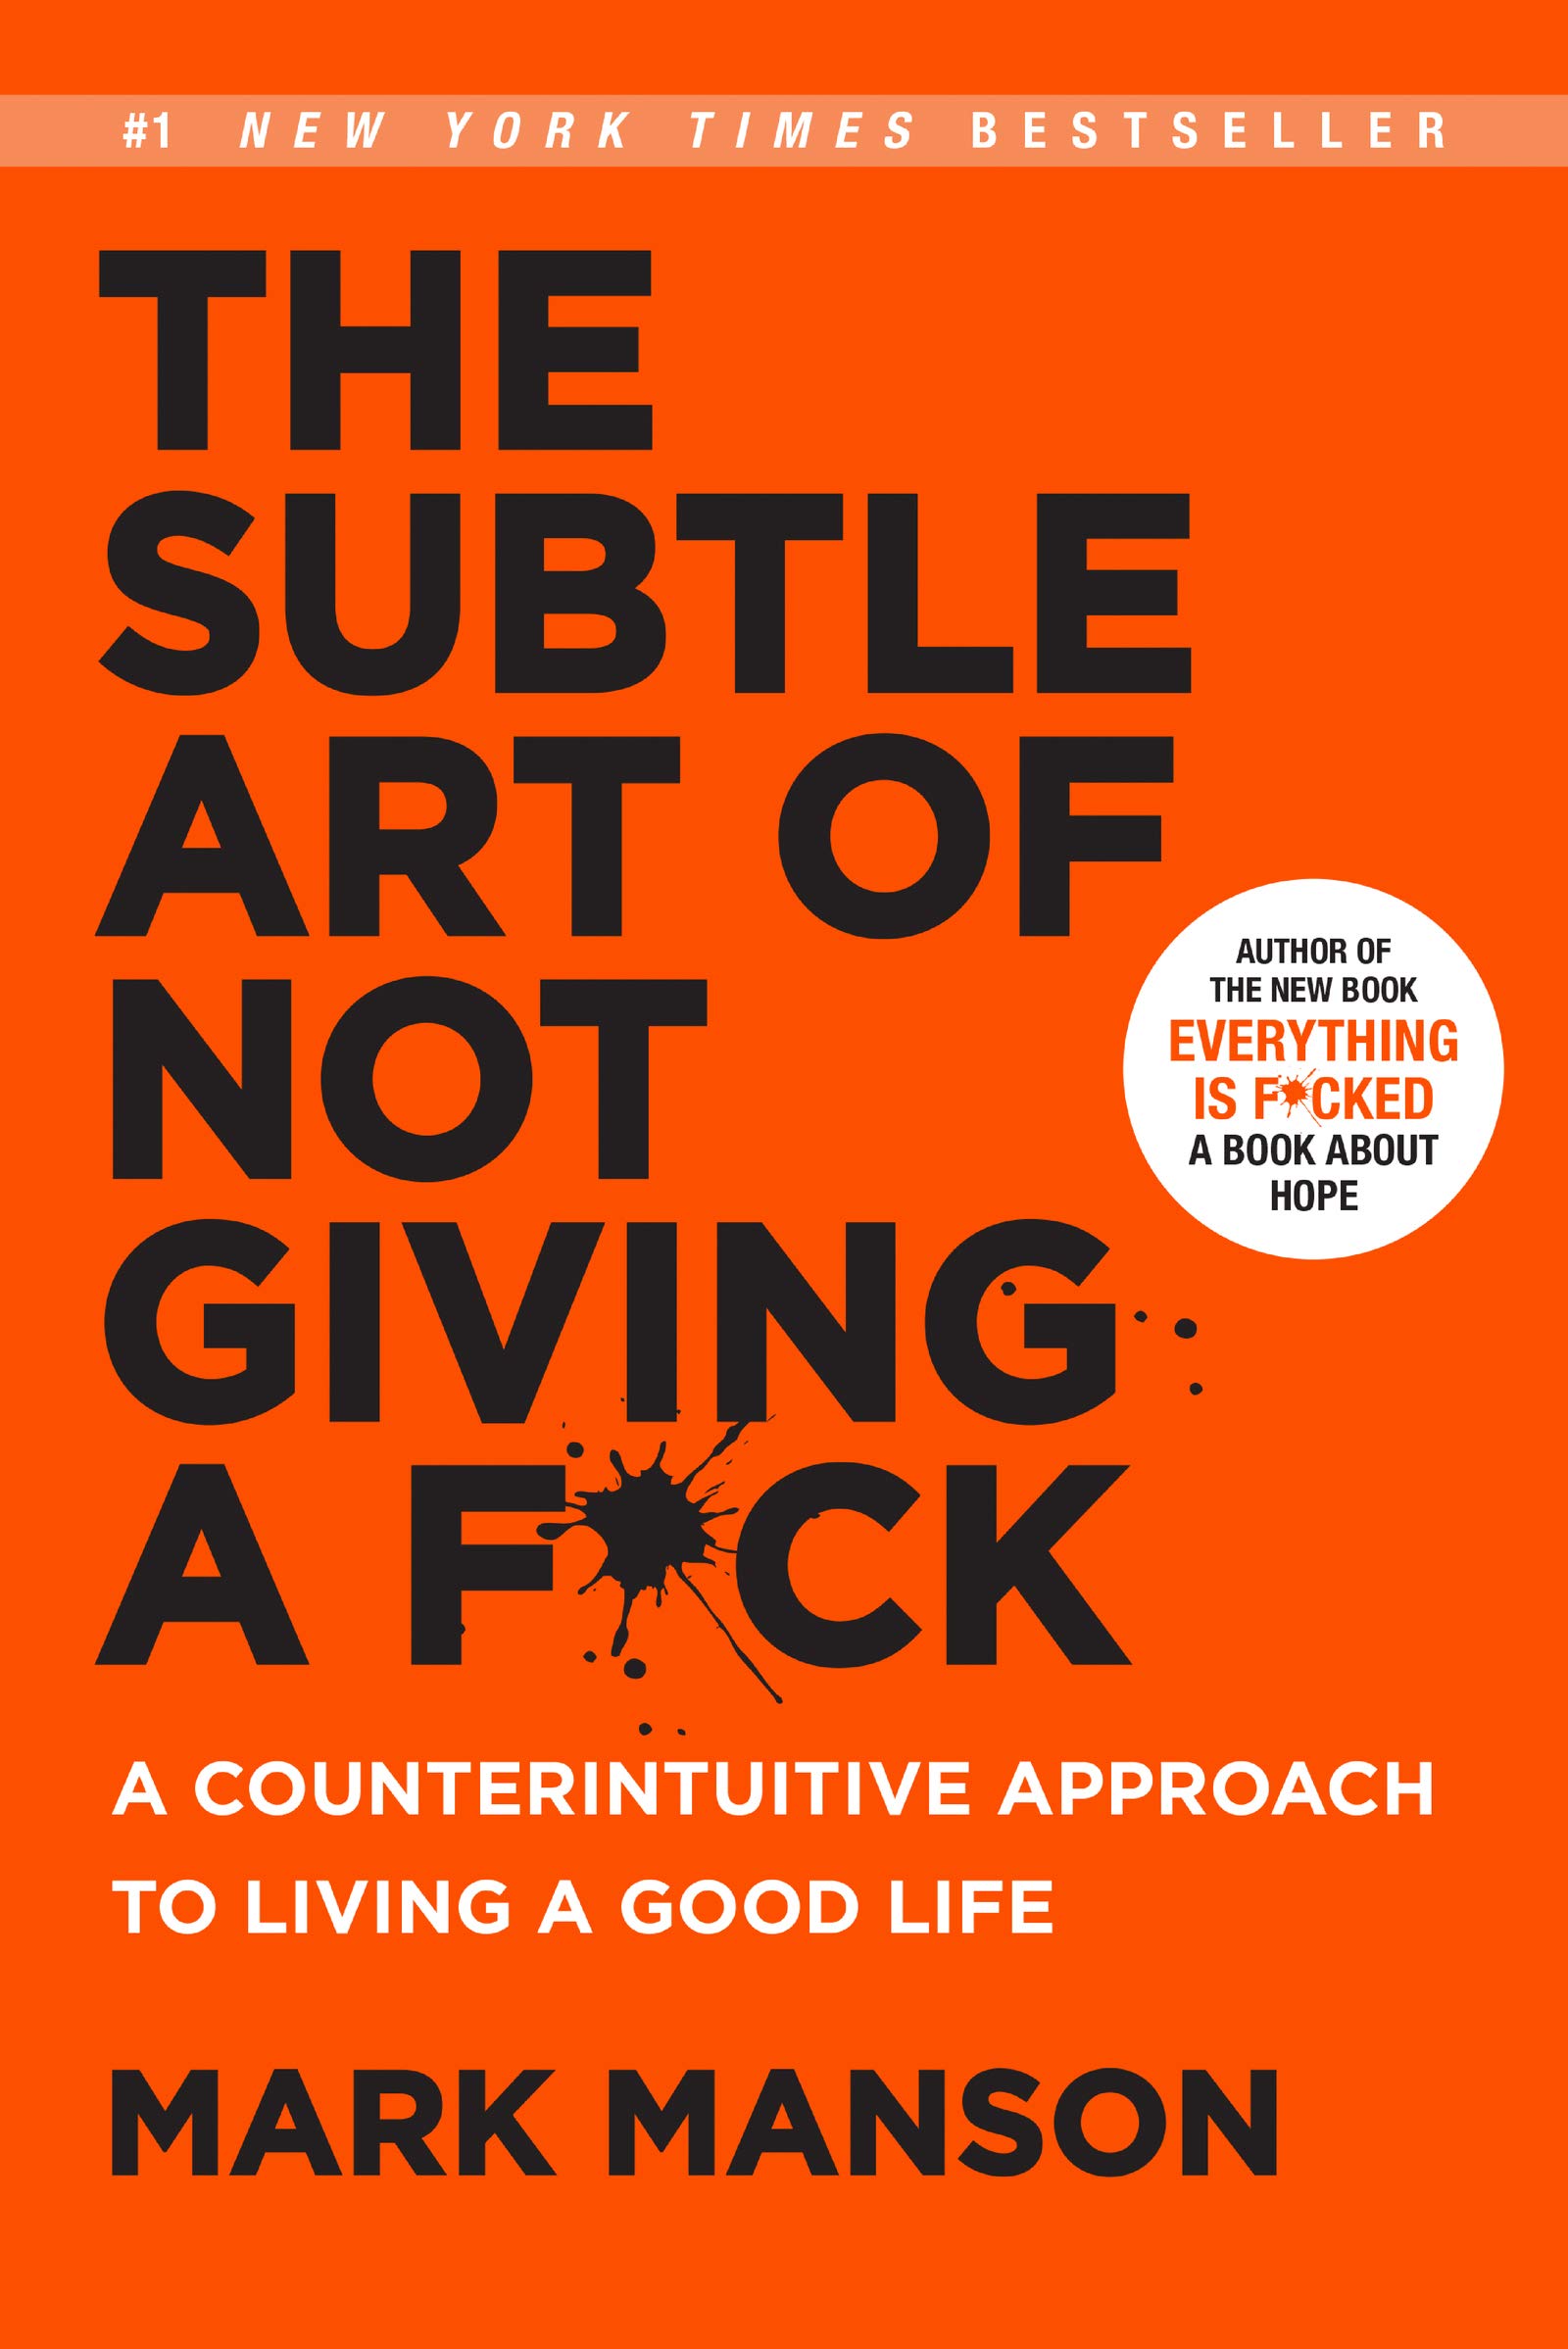 Mark Manson - The Subtle Art of Not Giving a Fck